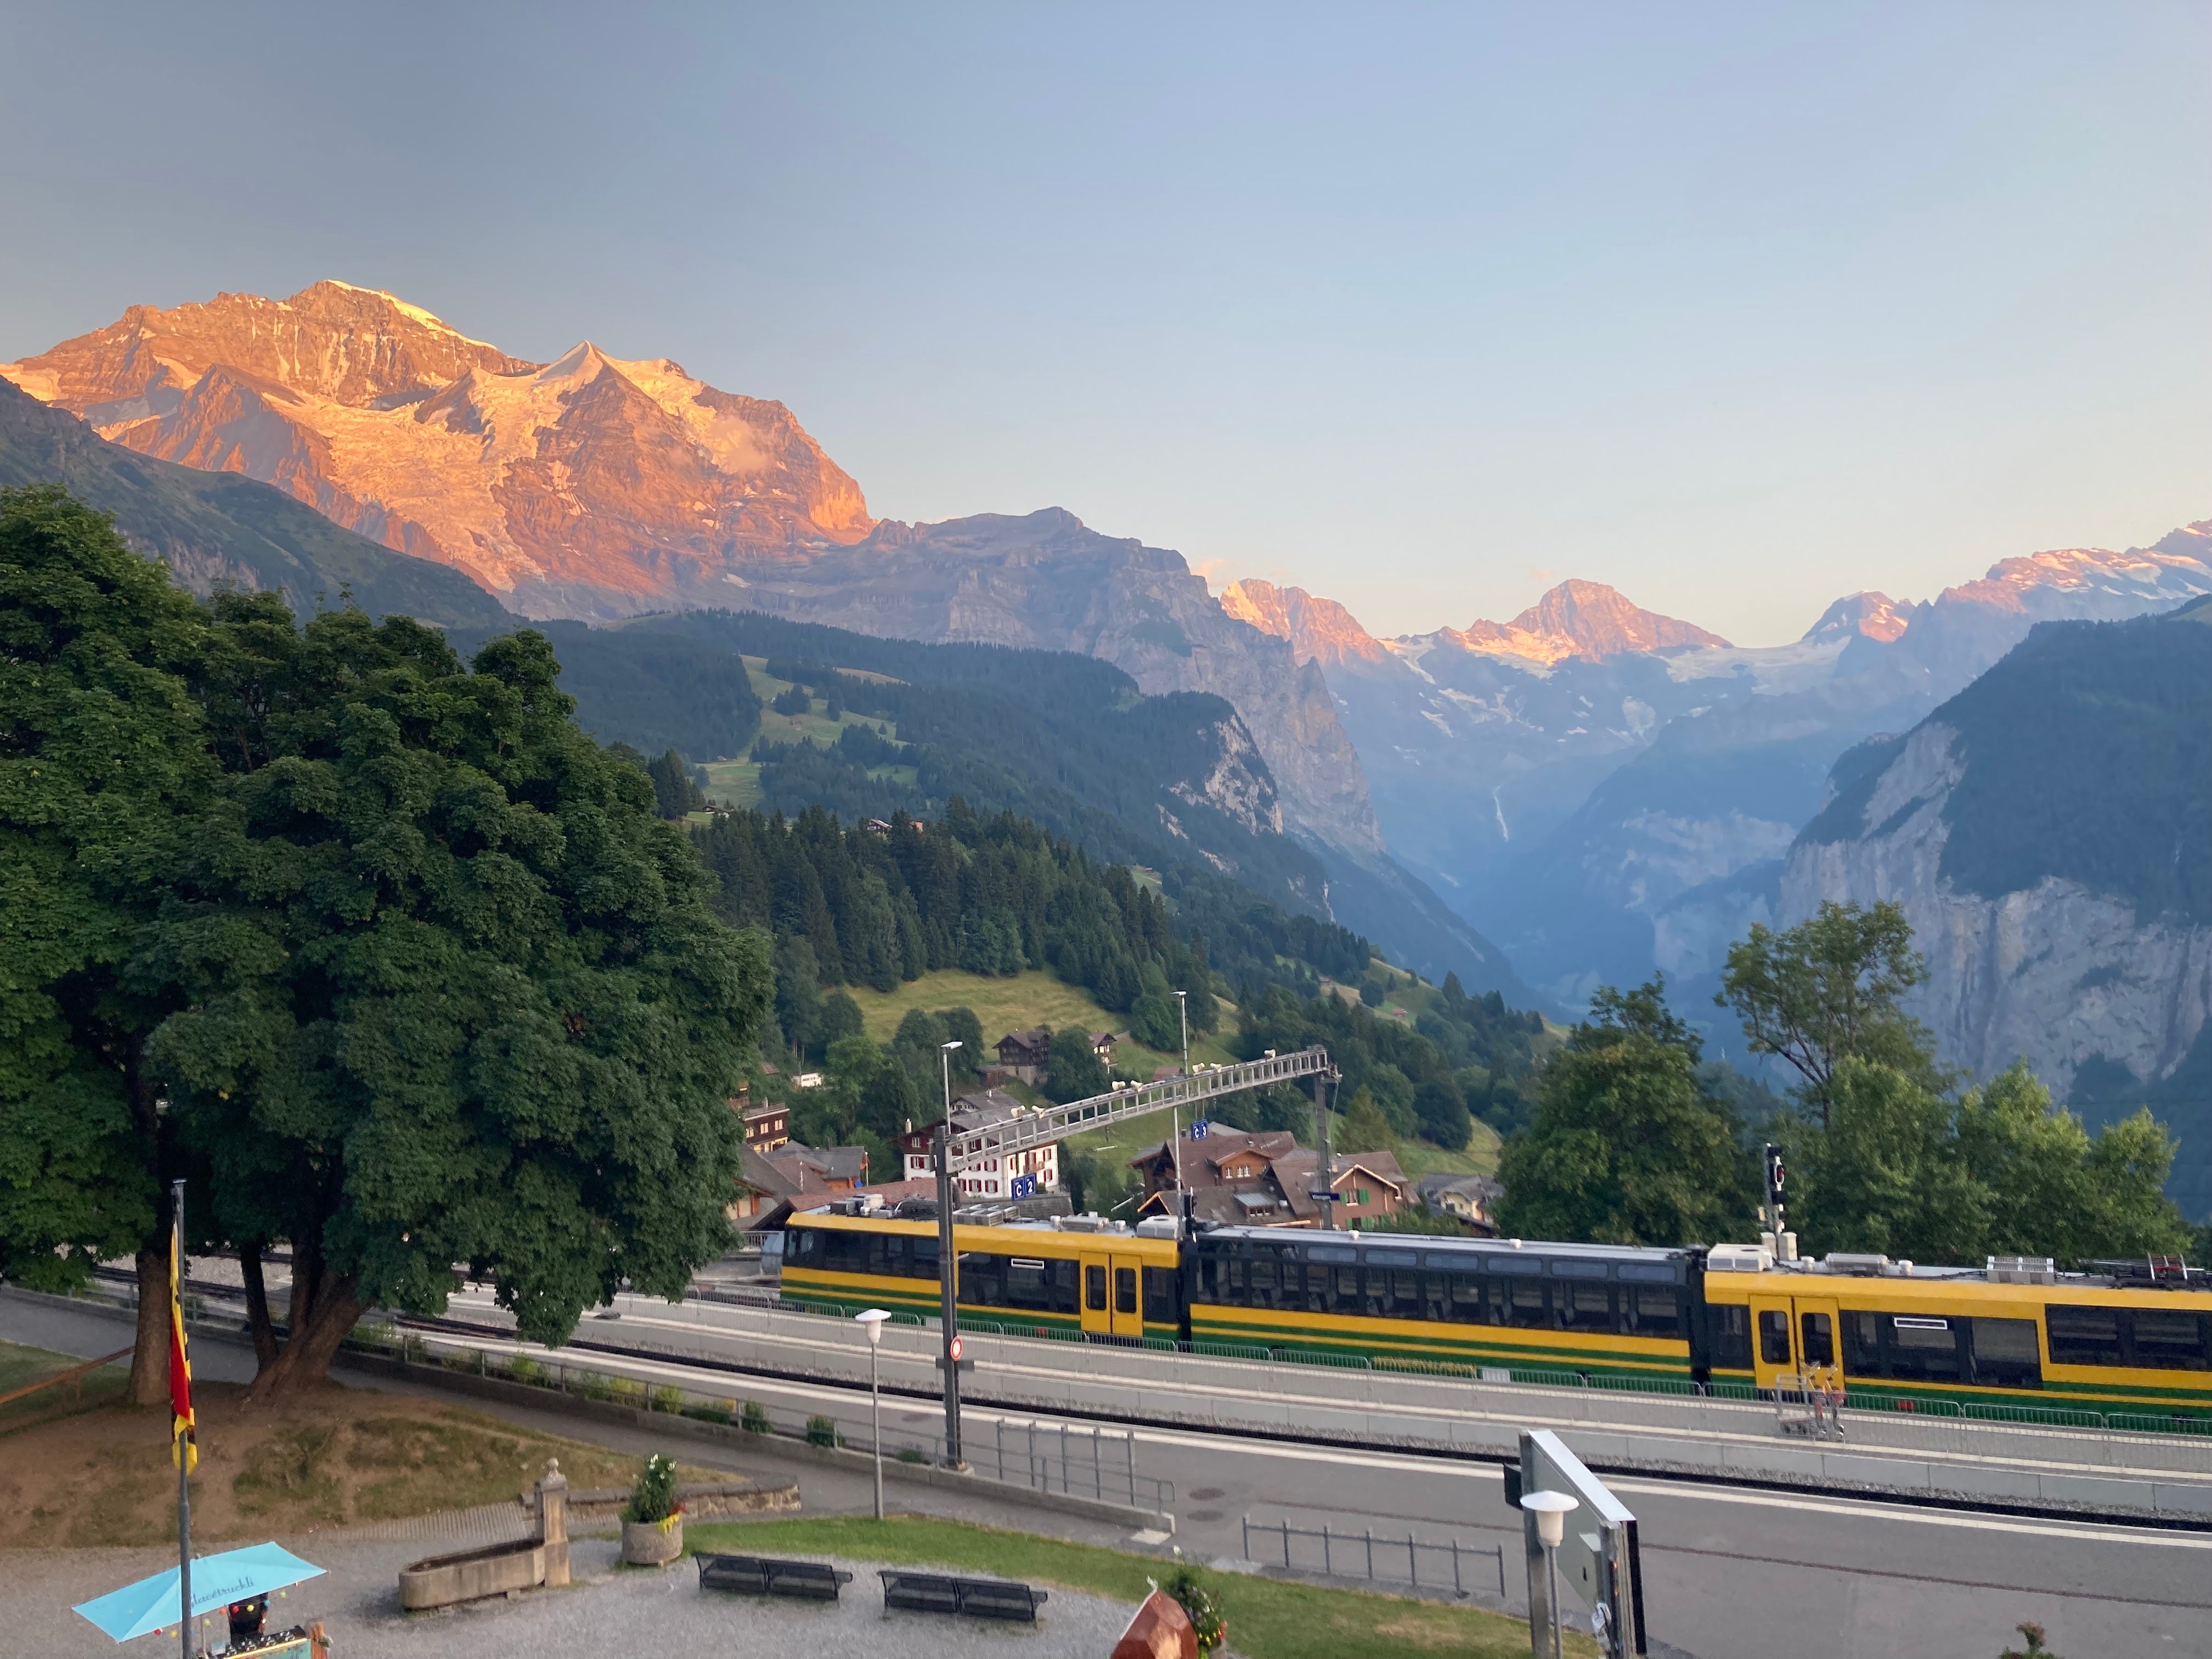 The train in Jungfrau, Switzerland